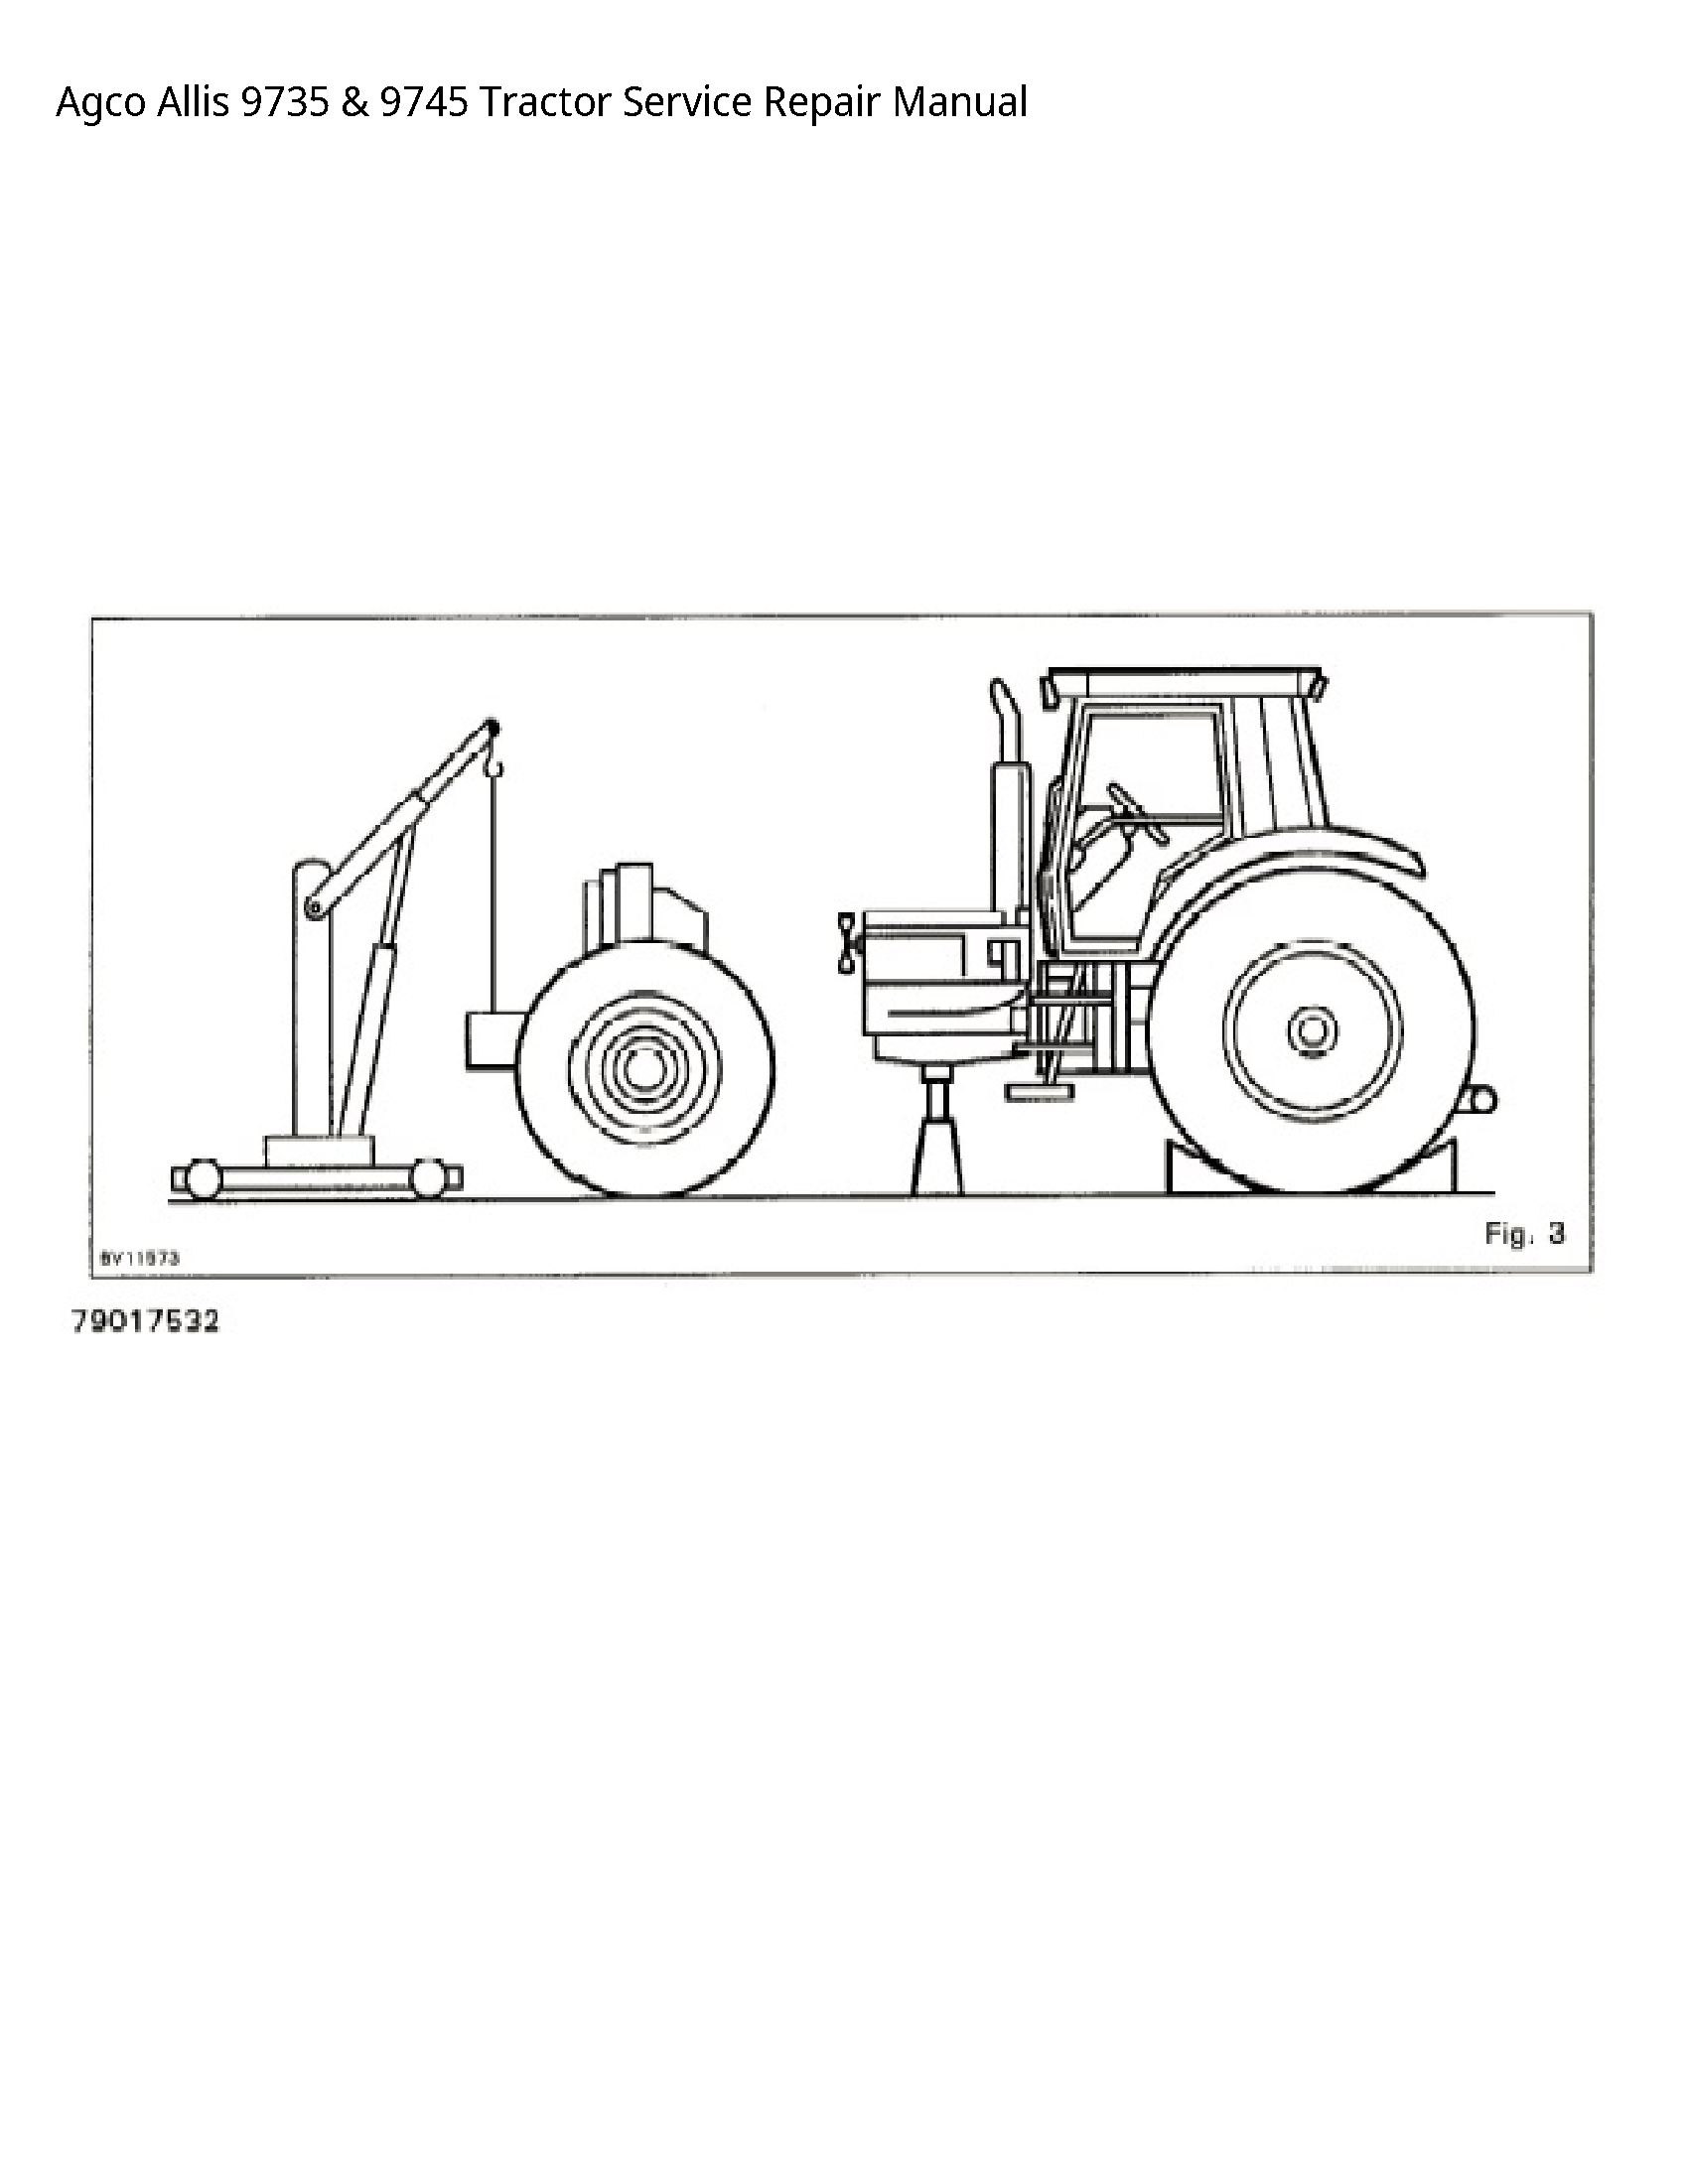 AGCO 9735 Allis Tractor manual